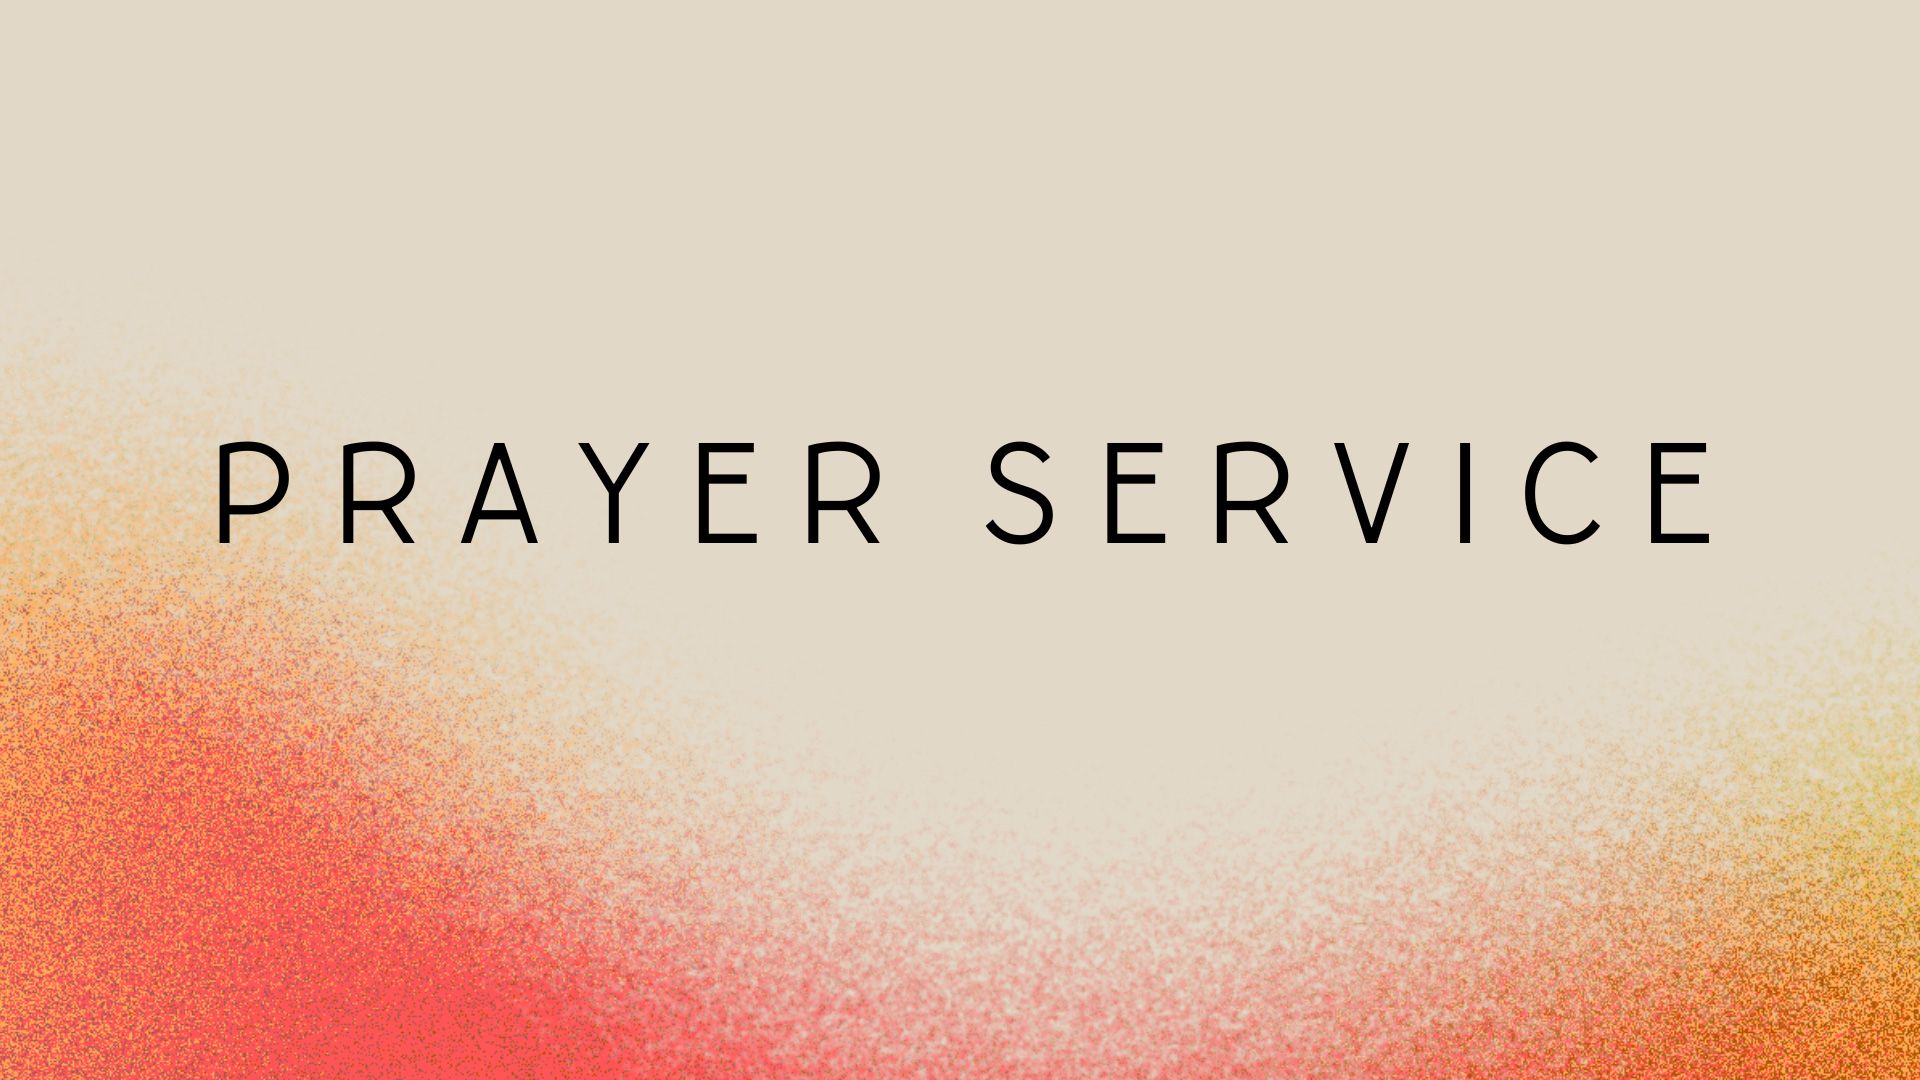 Prayer Service banner